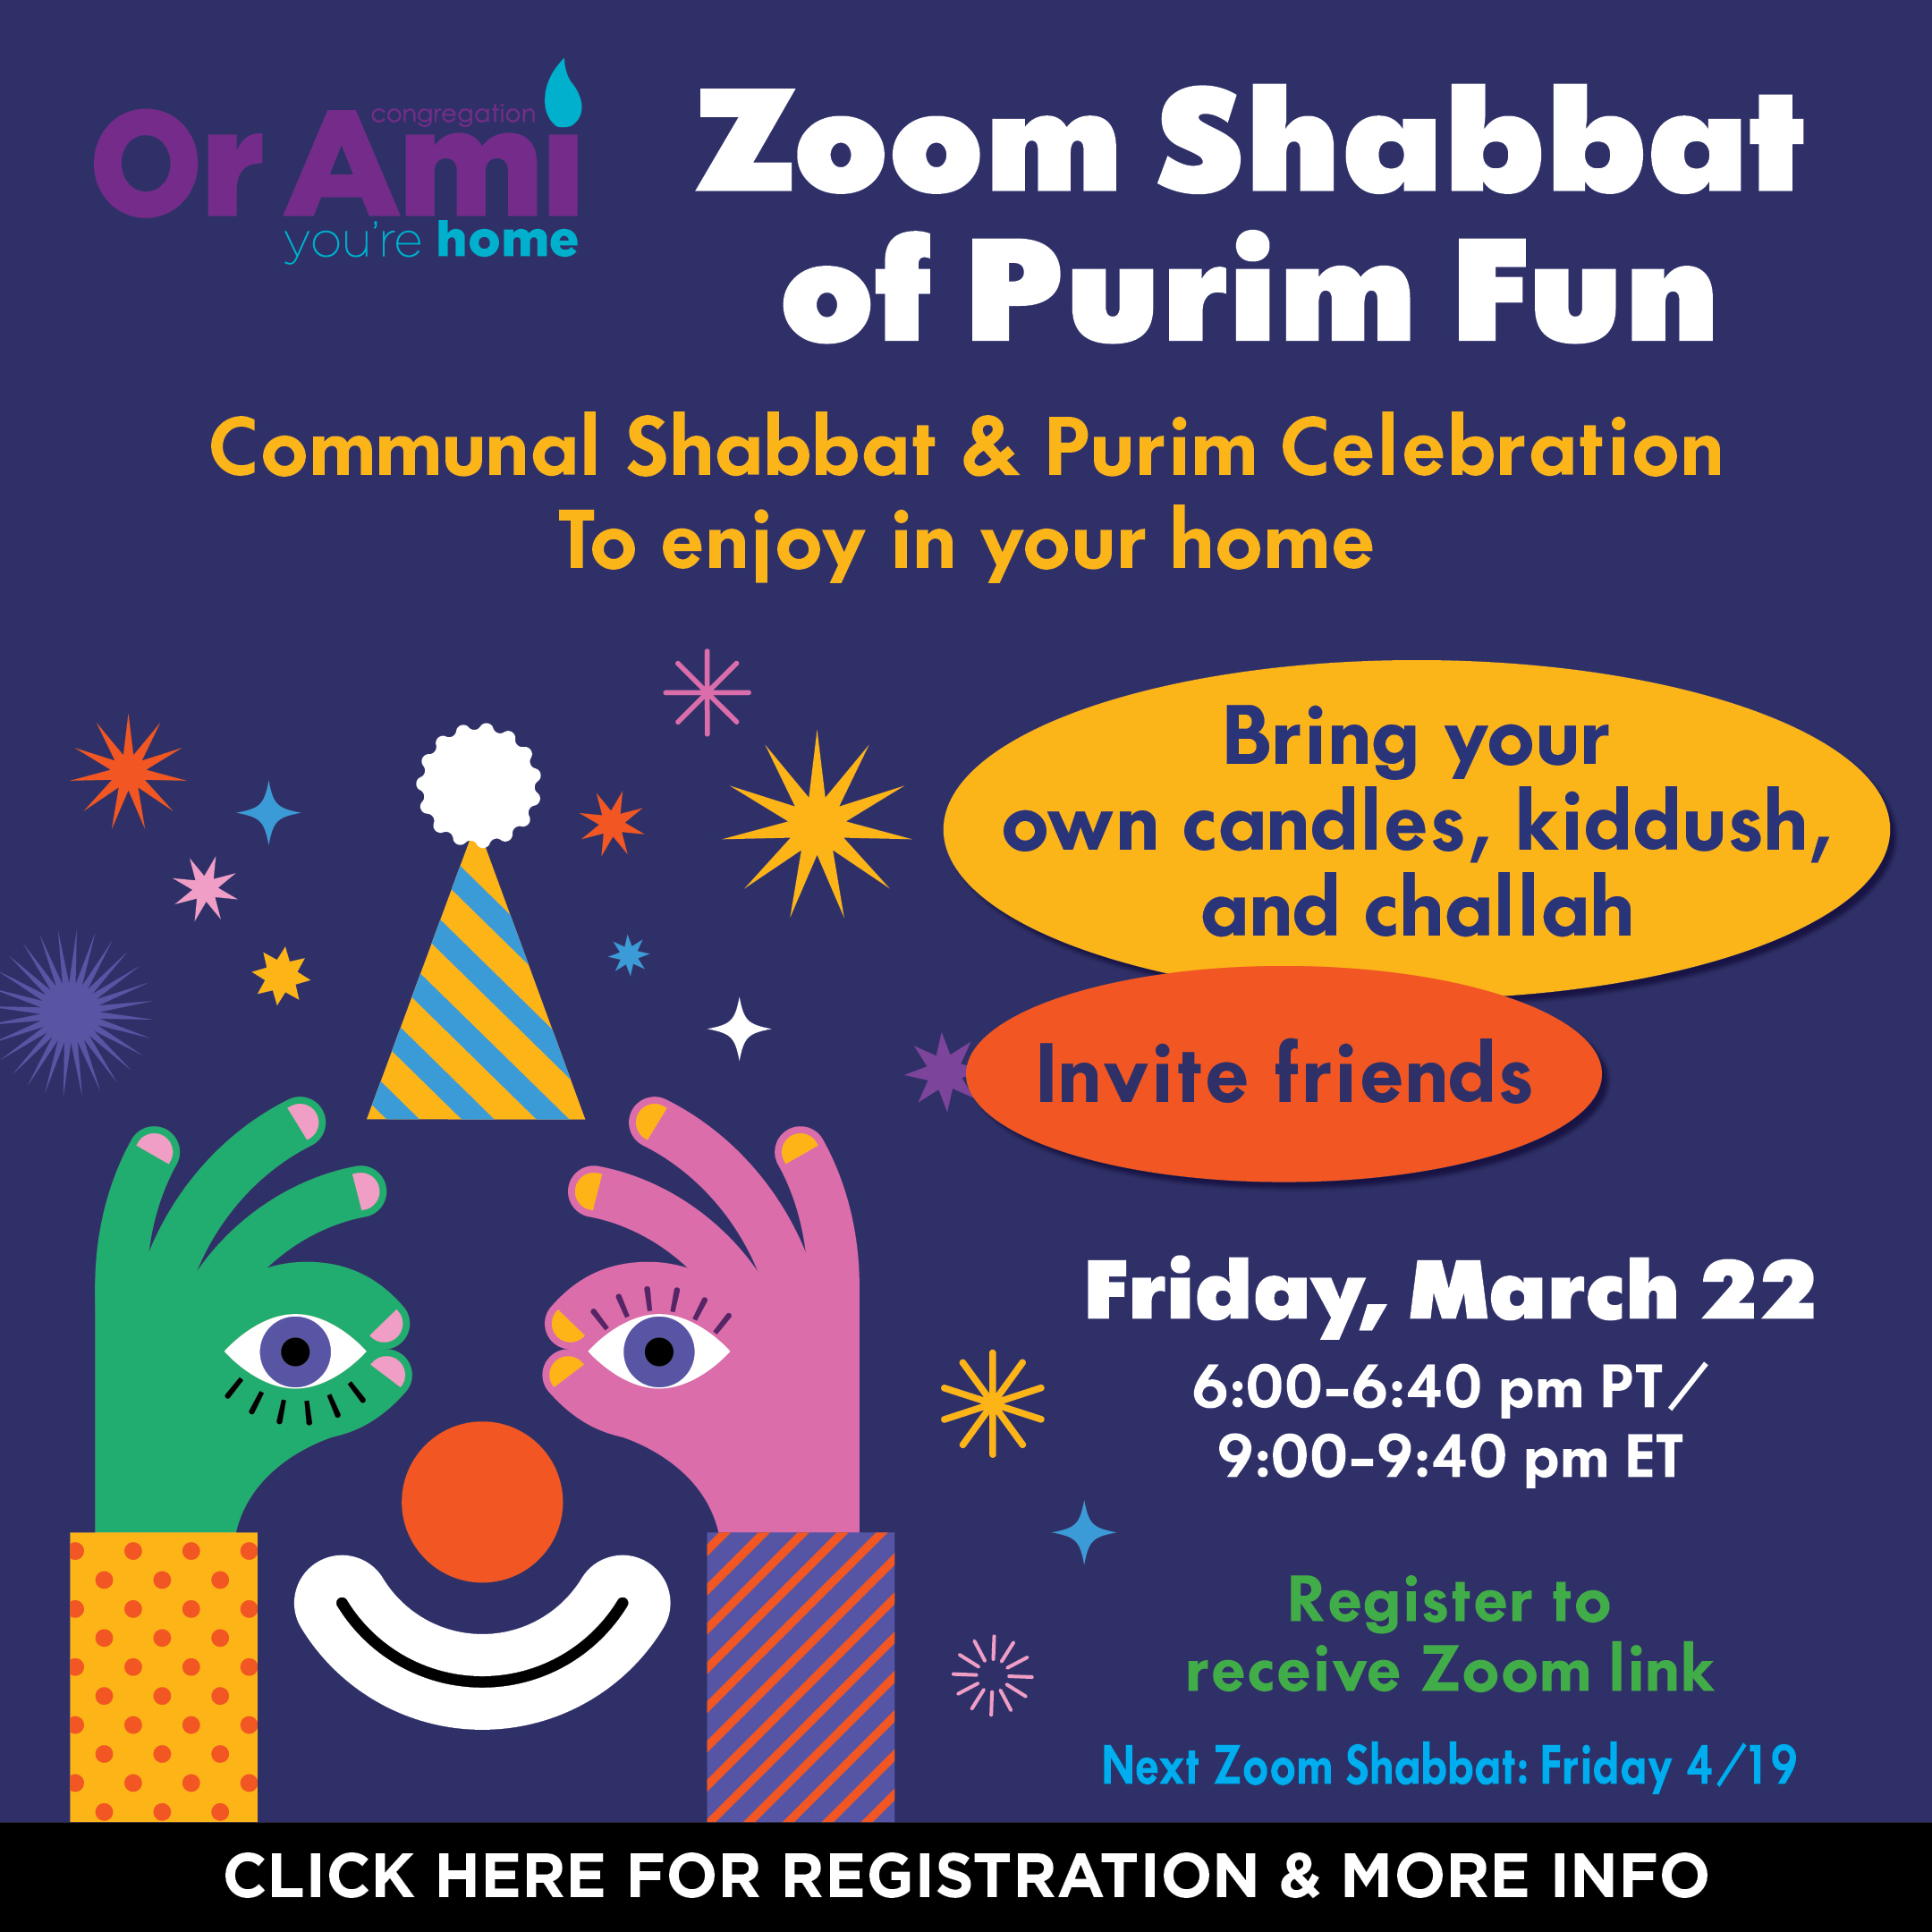 *Or Ami - Zoom Shabbat of Purim Fun CLICK